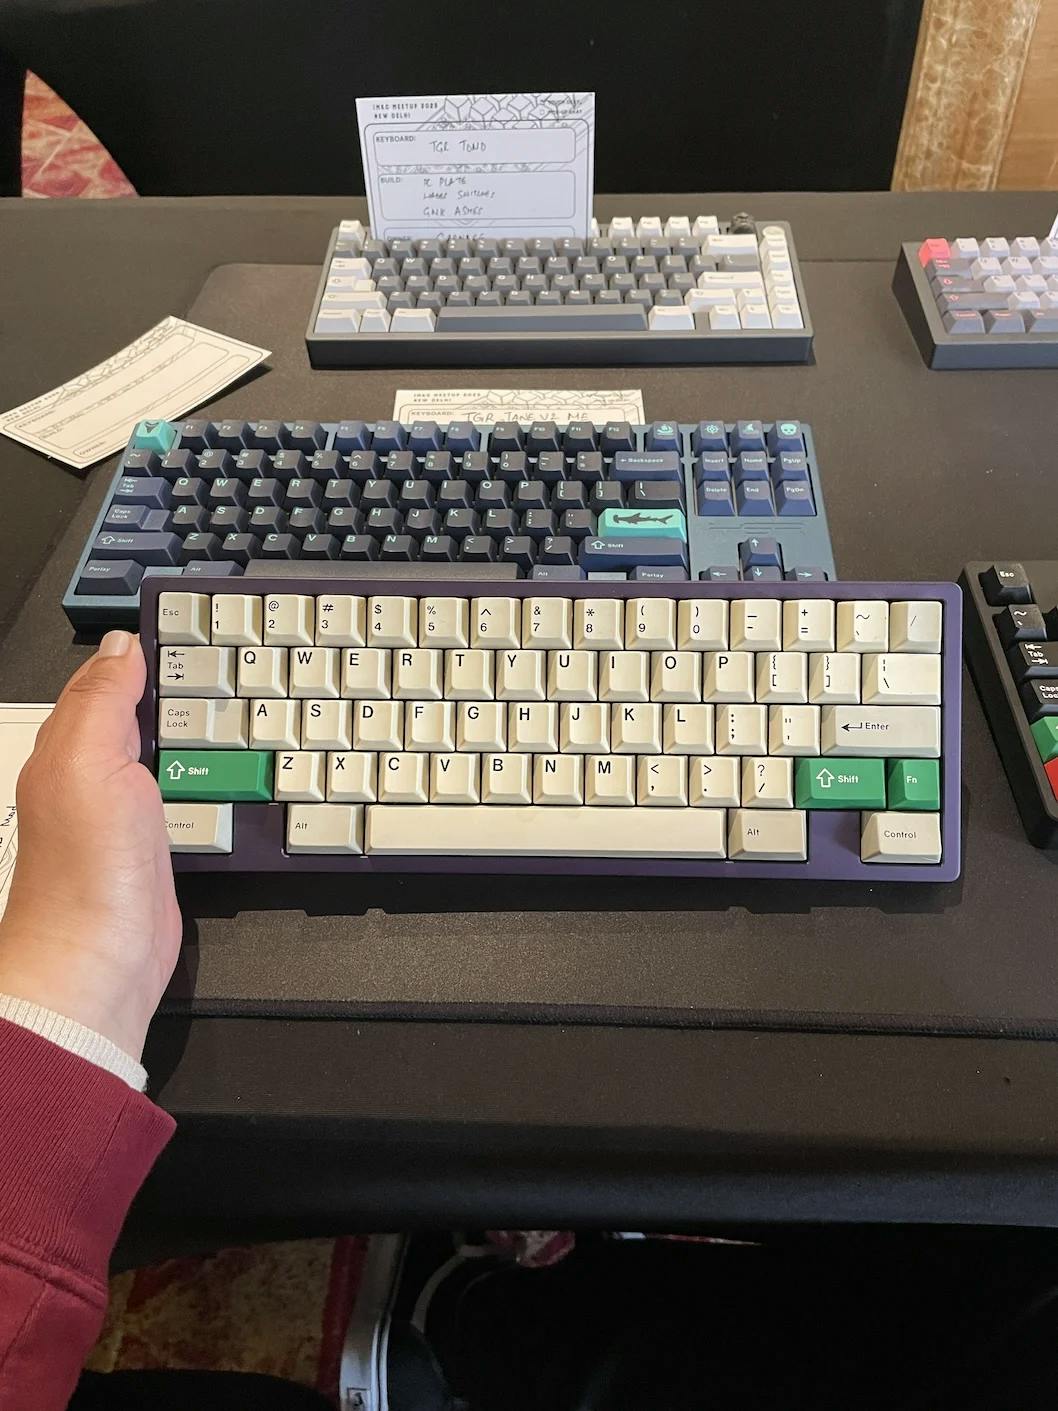 A 60%, winkey-less purple mechanical keyboard with beige keycaps